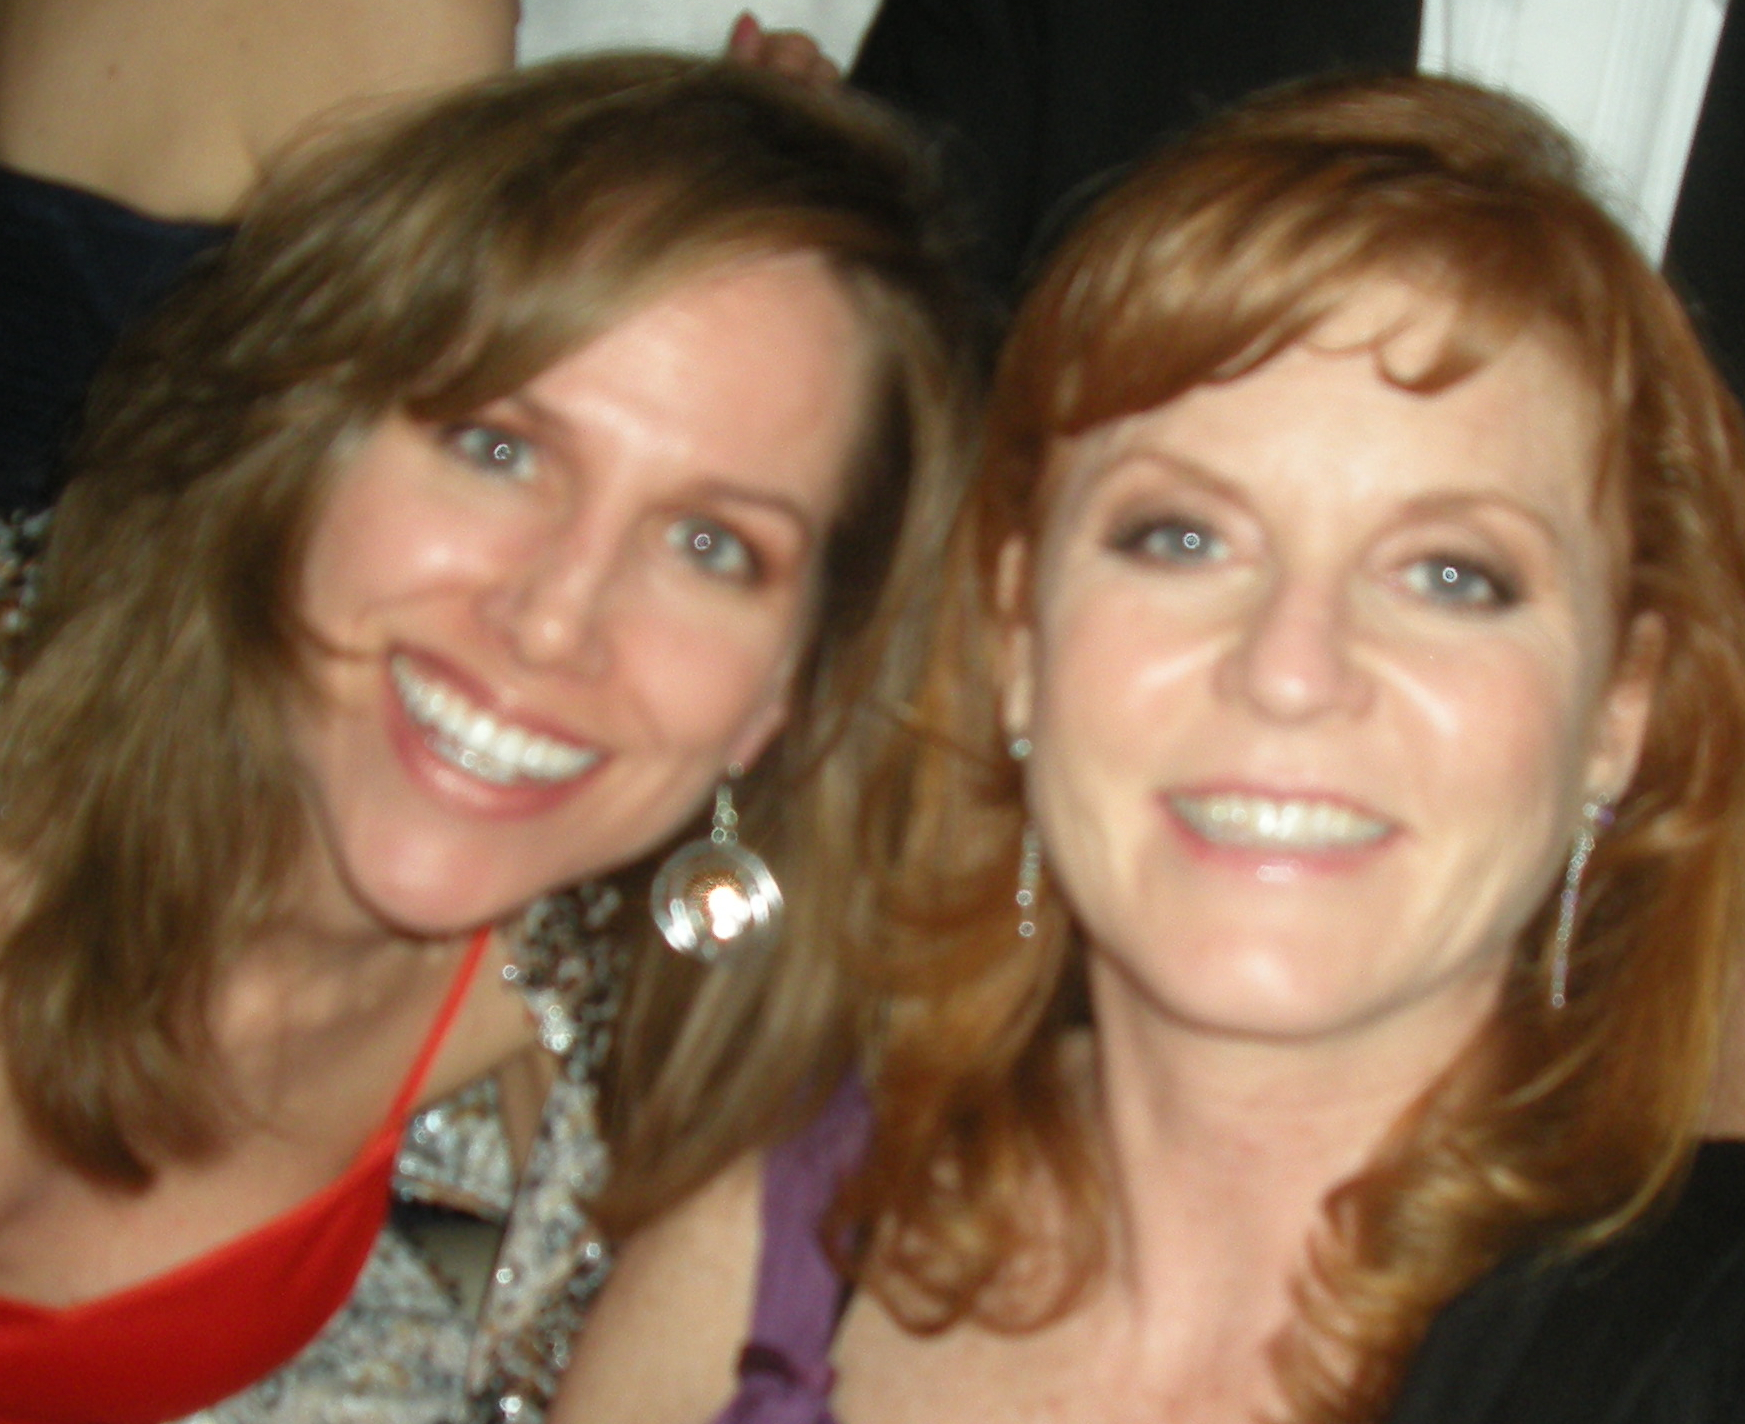 Jordan Roberts & Sarah Ferguson at Variety's Humanitarian Awards Dinner @ the Kodak Theatre, May 23, 2010.